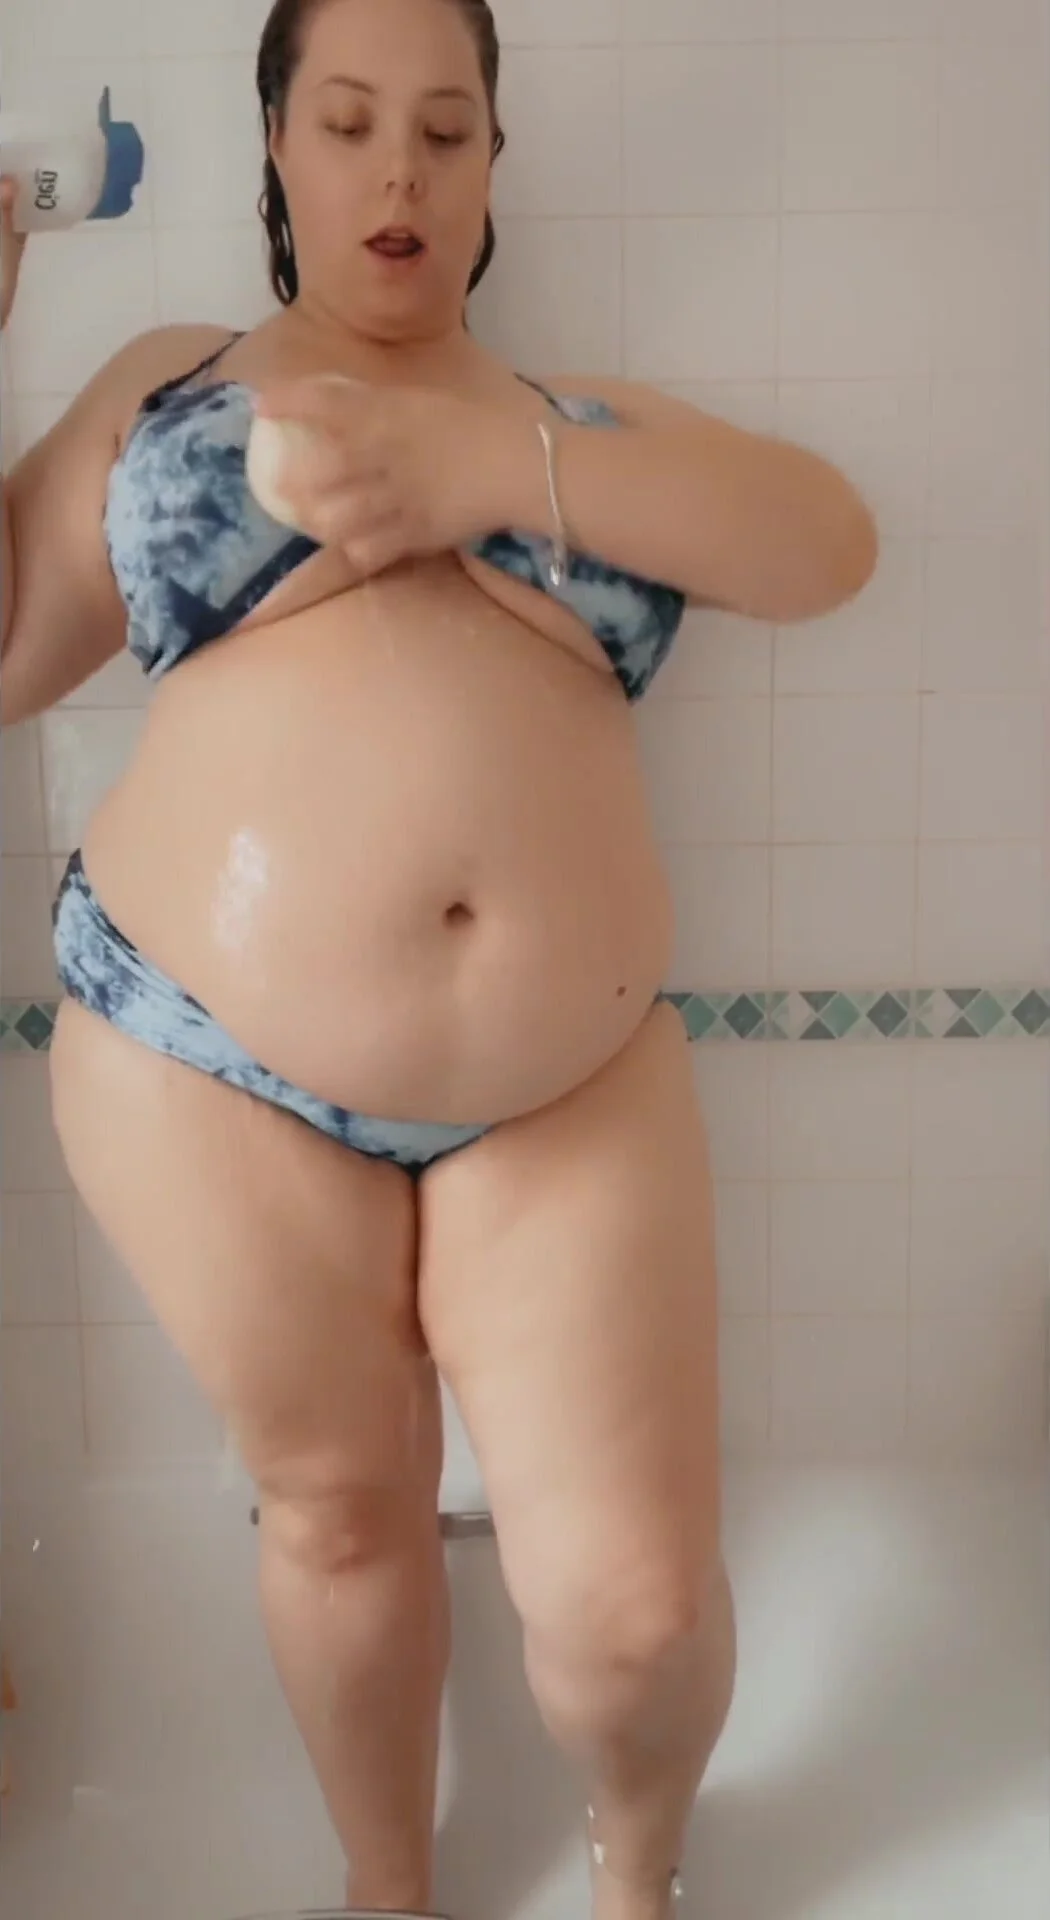 Chubby Bbw Girl - Chubby: fat girl , fat body fat ass , fatbelly - ThisVid.com